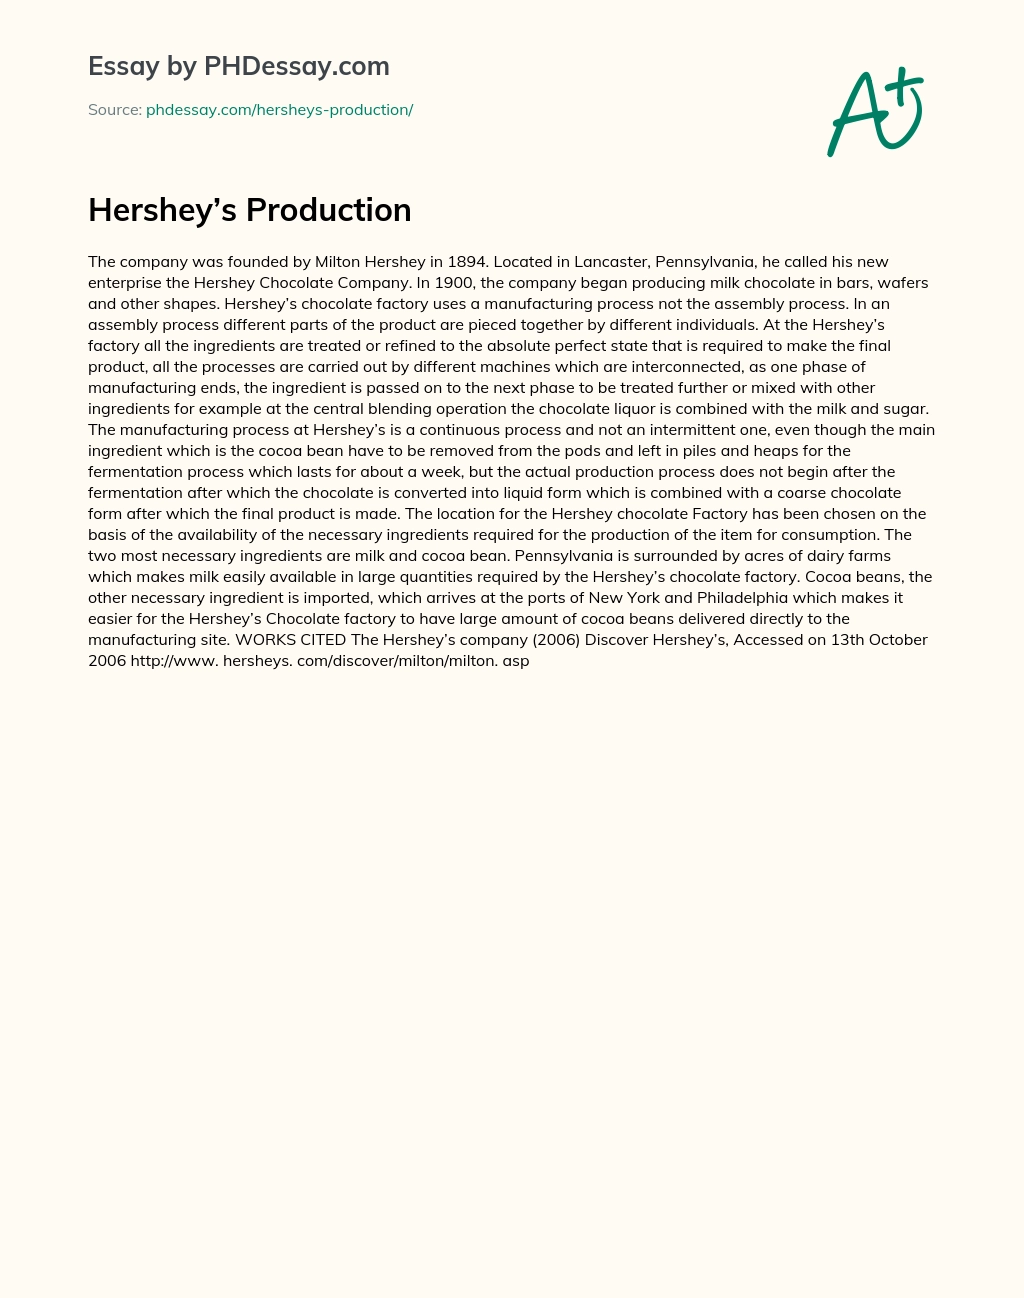 Hershey’s Production essay